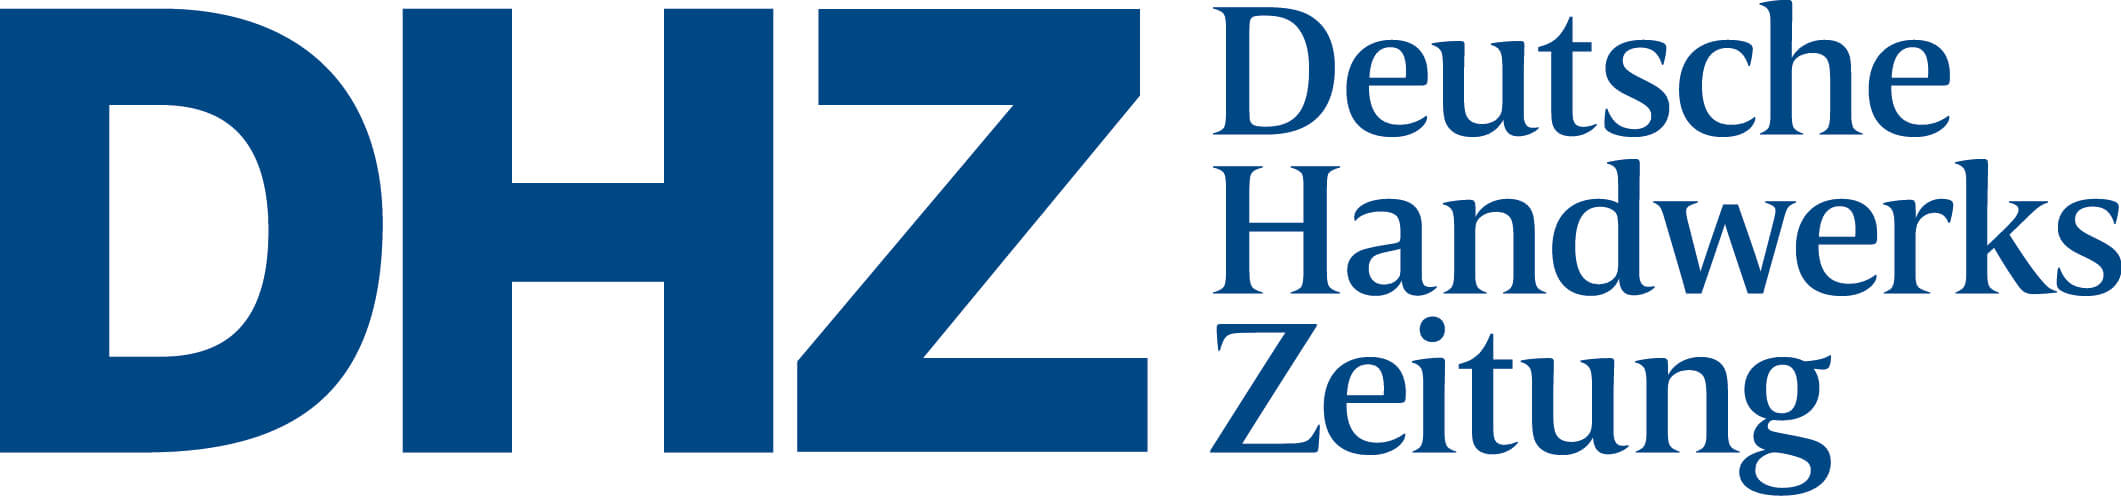 holzmann-medien-dhz-logo.jpg